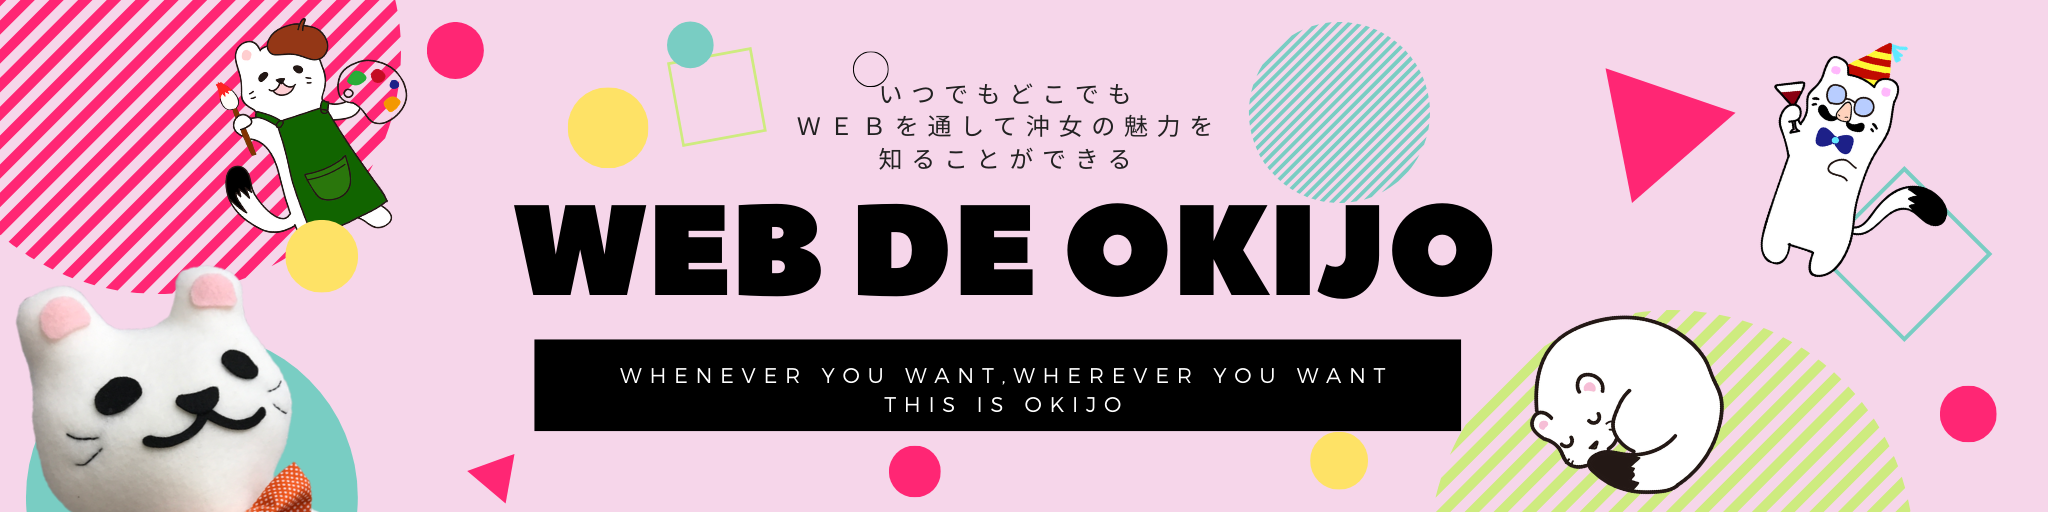 Webオープンキャンパス「Web de OKIJO」開催中です。